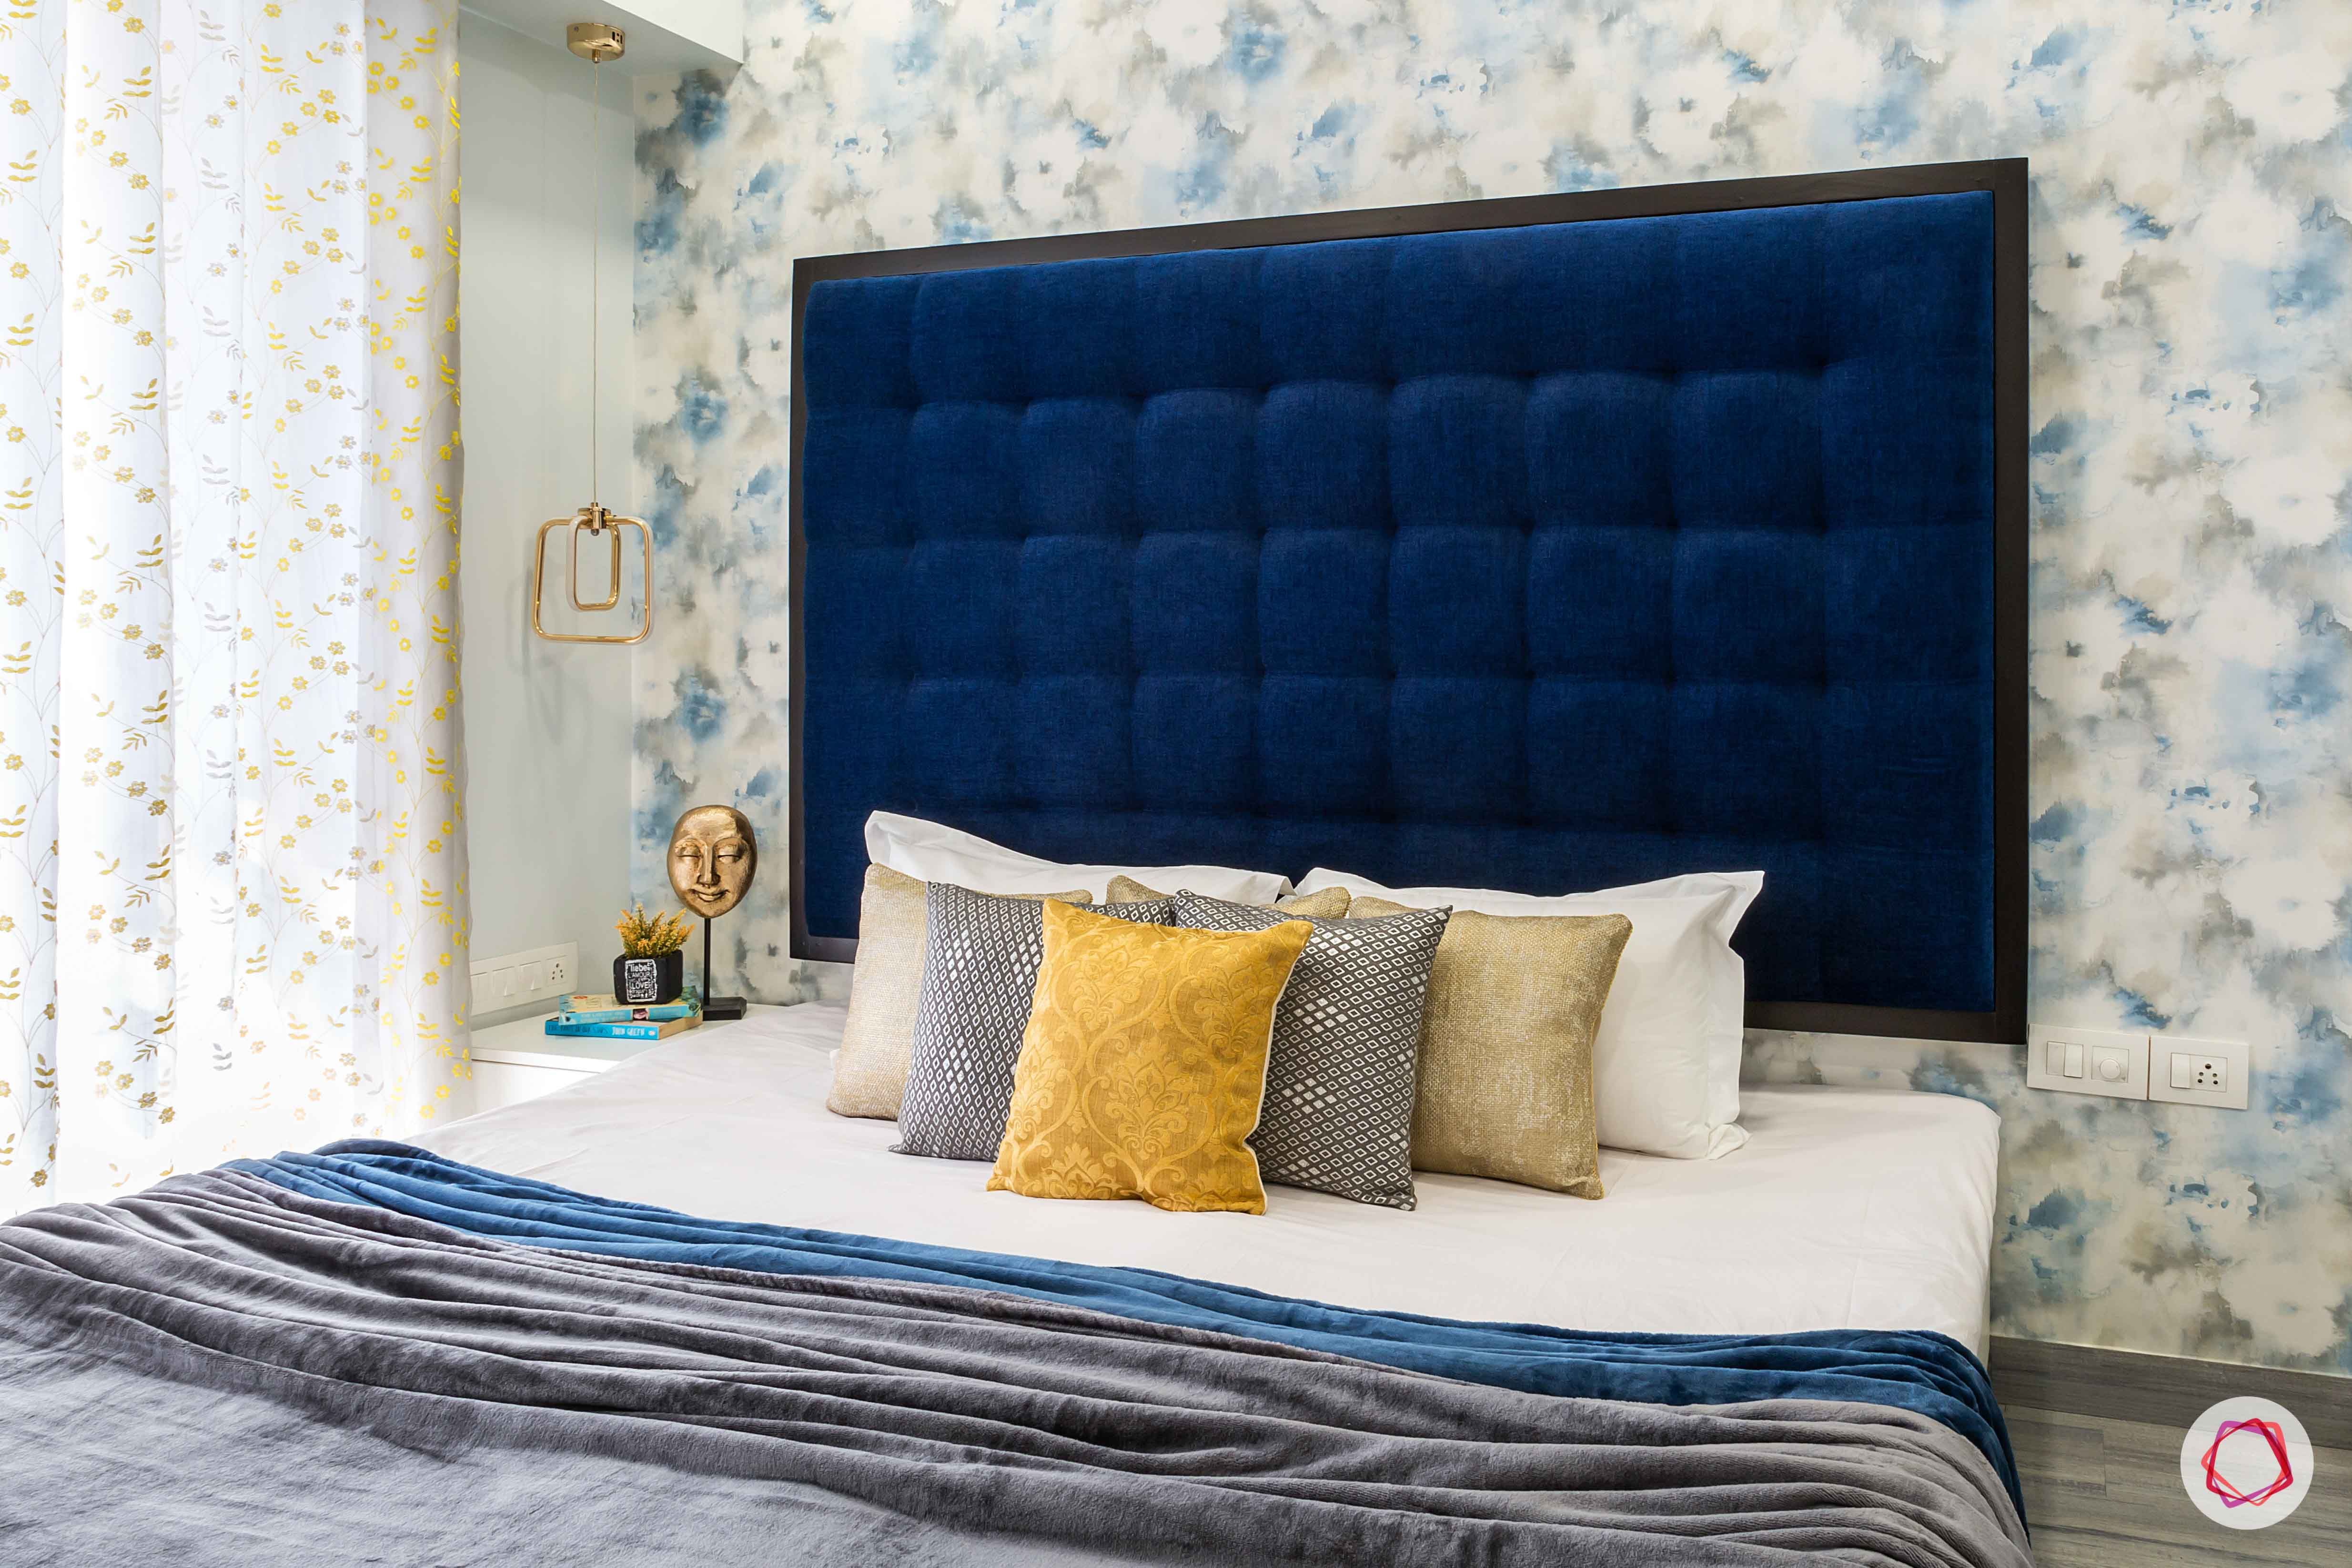 bedroom-blue-headboard-floral-wallpaper-pillows
